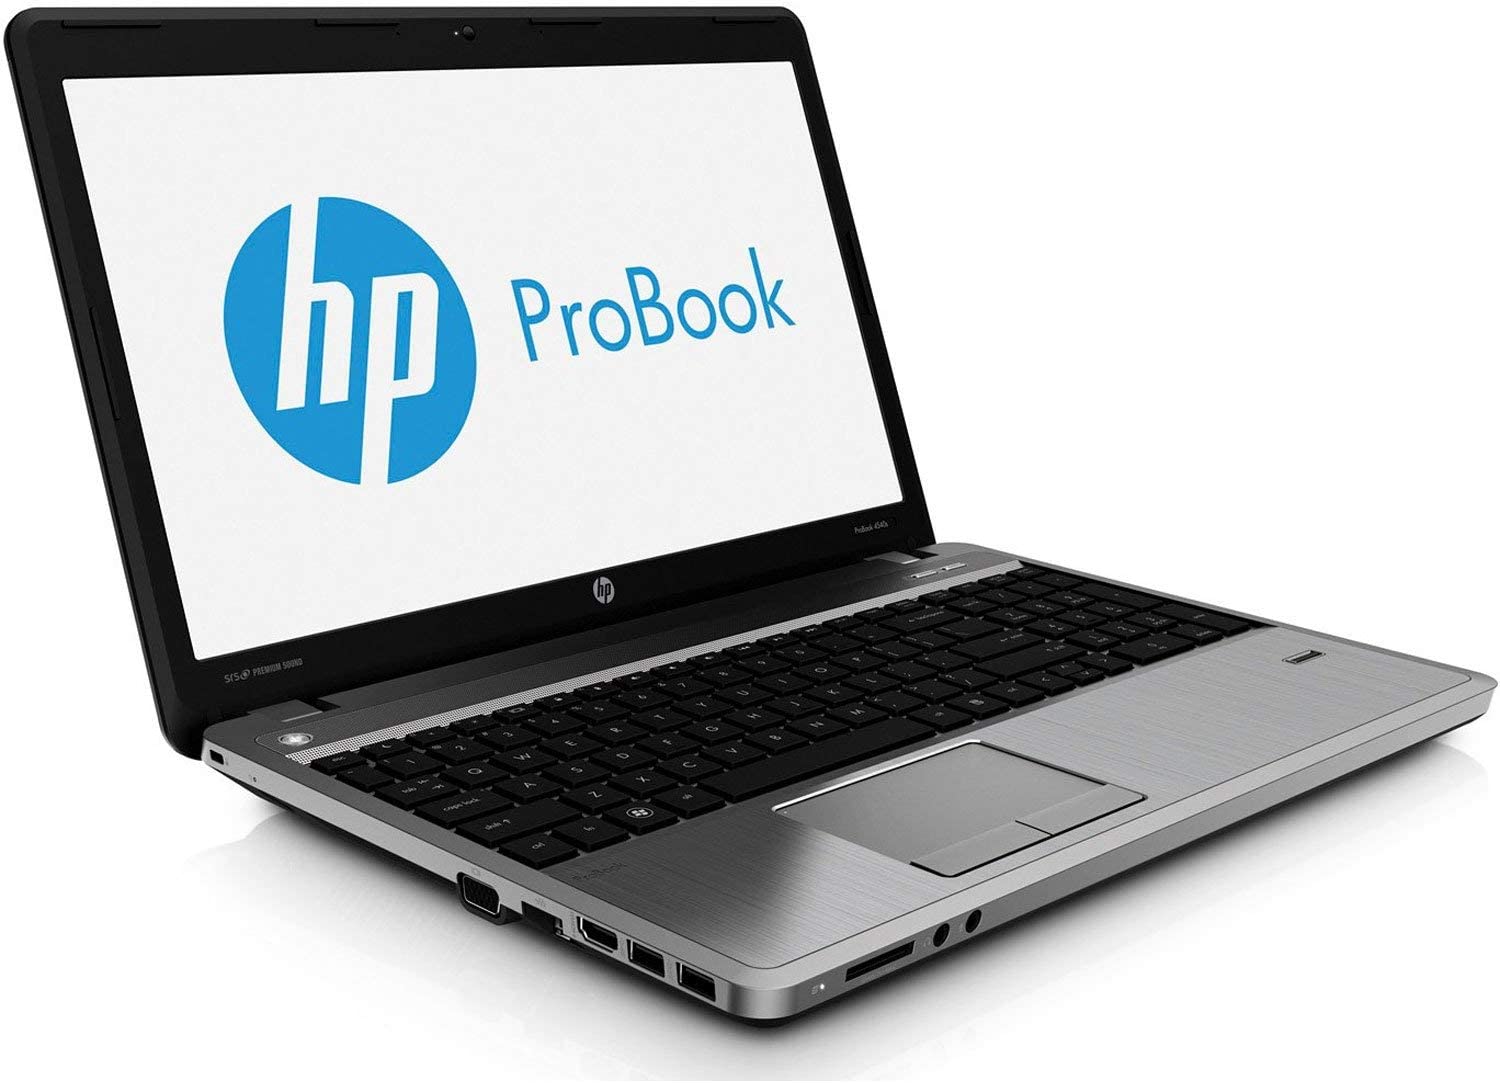 HP Probook 640 G1 Core i3 -4000M 2.40 GHZ , 14 inches hd display windows 10 Pro (Renewed)